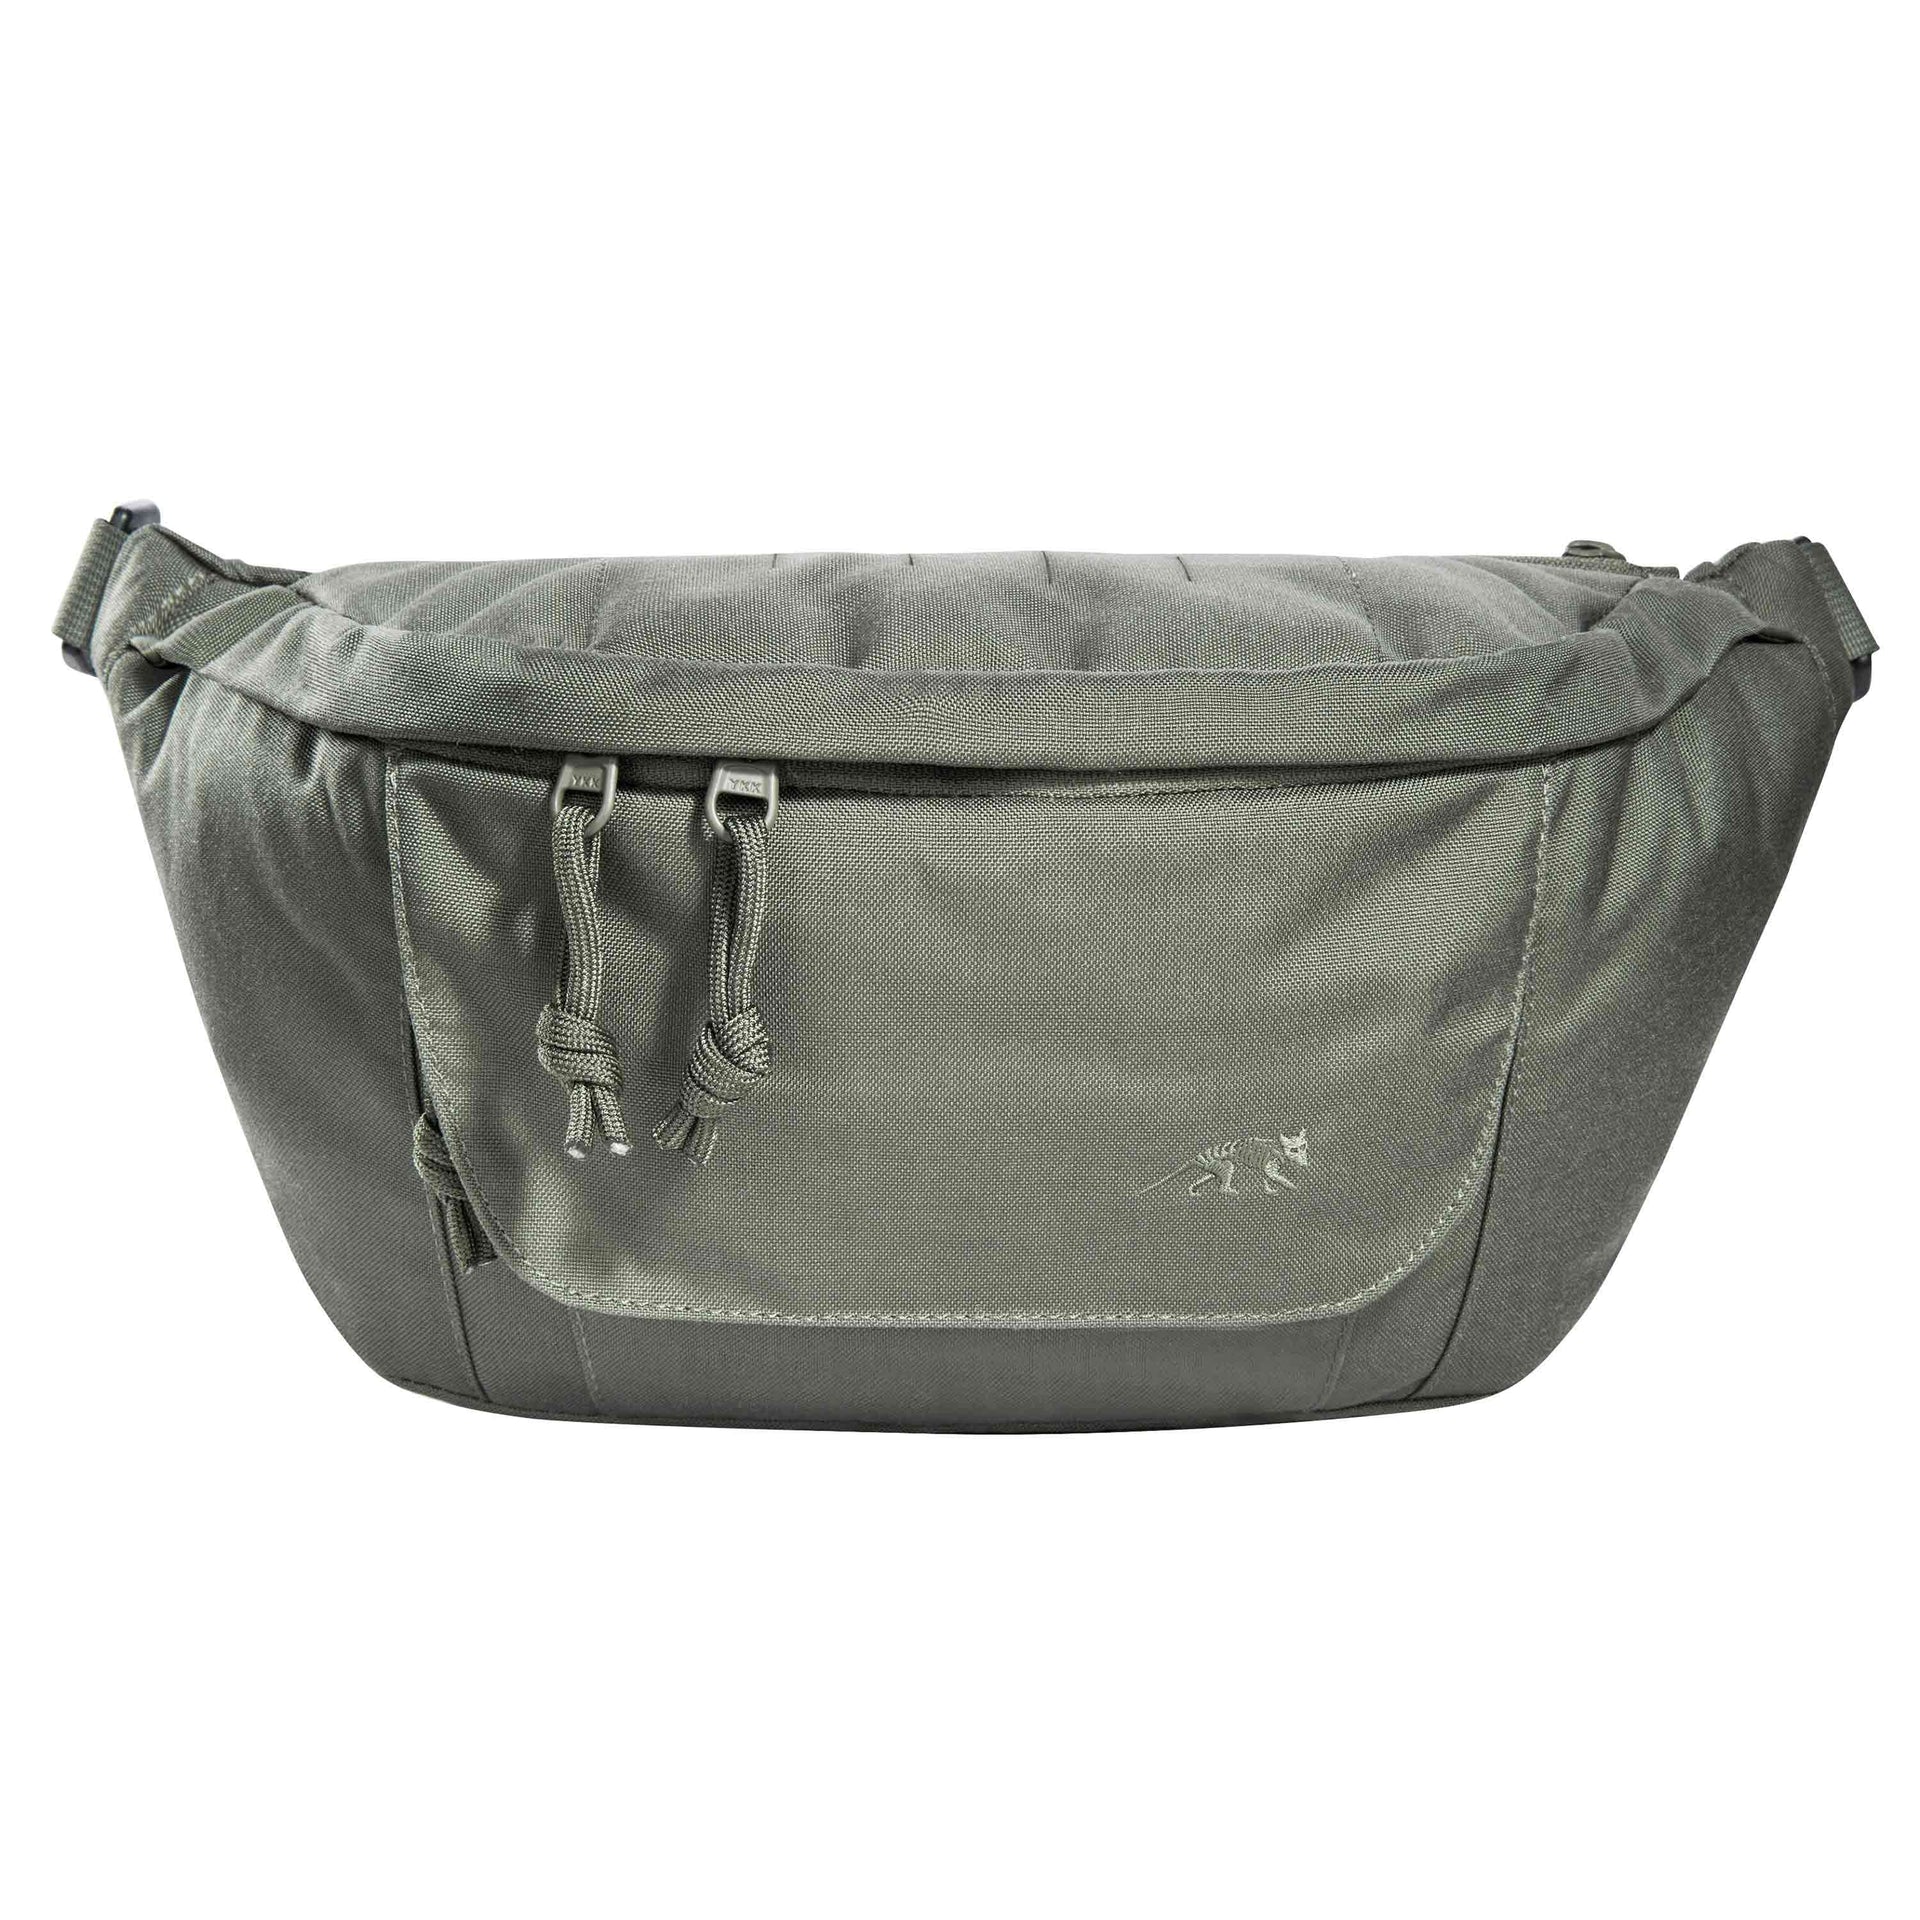 Modular Hip Bag II IRR stone grey/